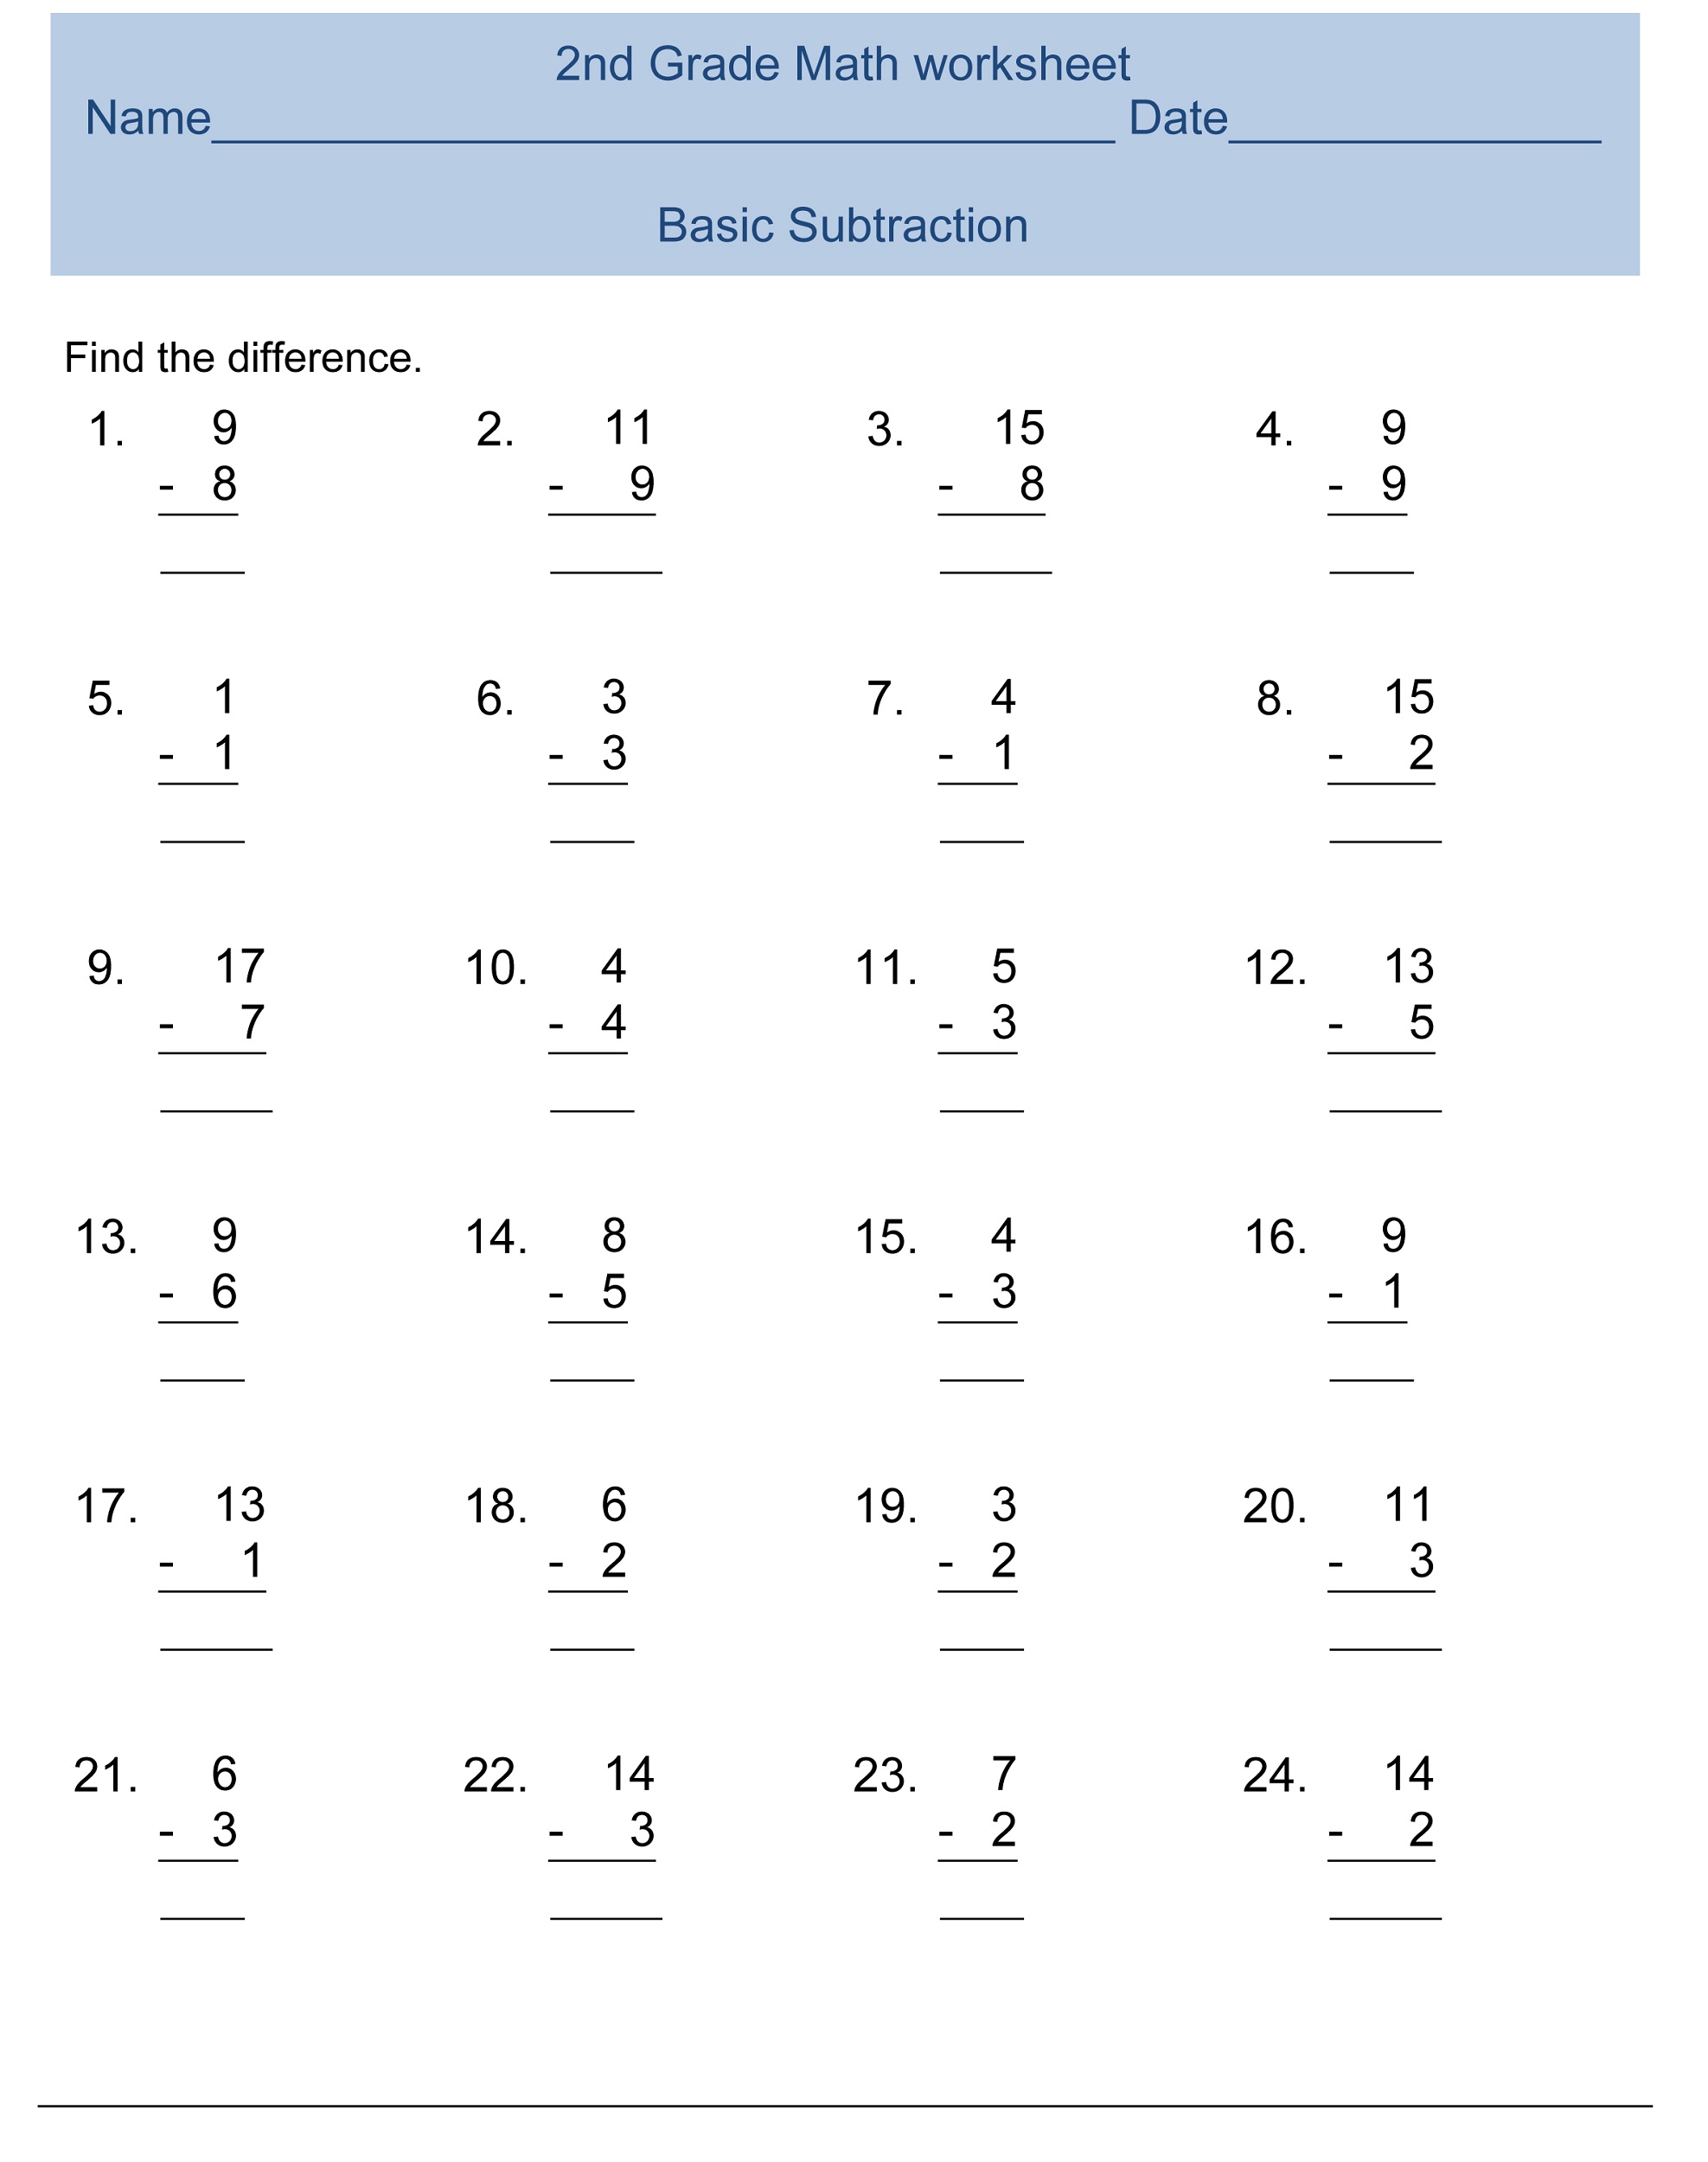 Free 2nd Grade Math Worksheets | Activity Shelter